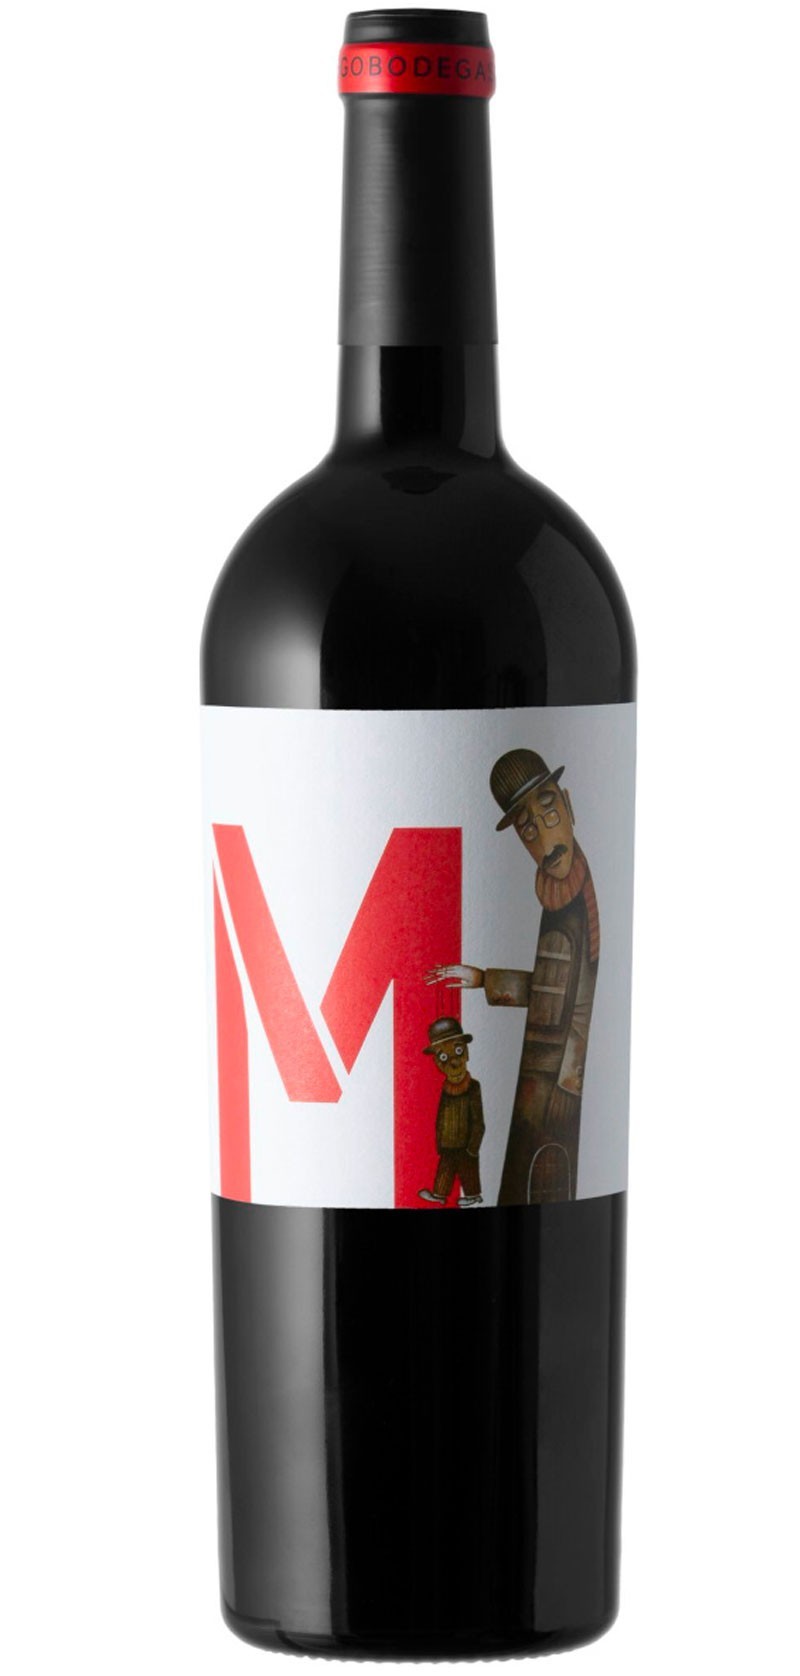 Marionette - Jumilla - 2018 - Spanish red wine